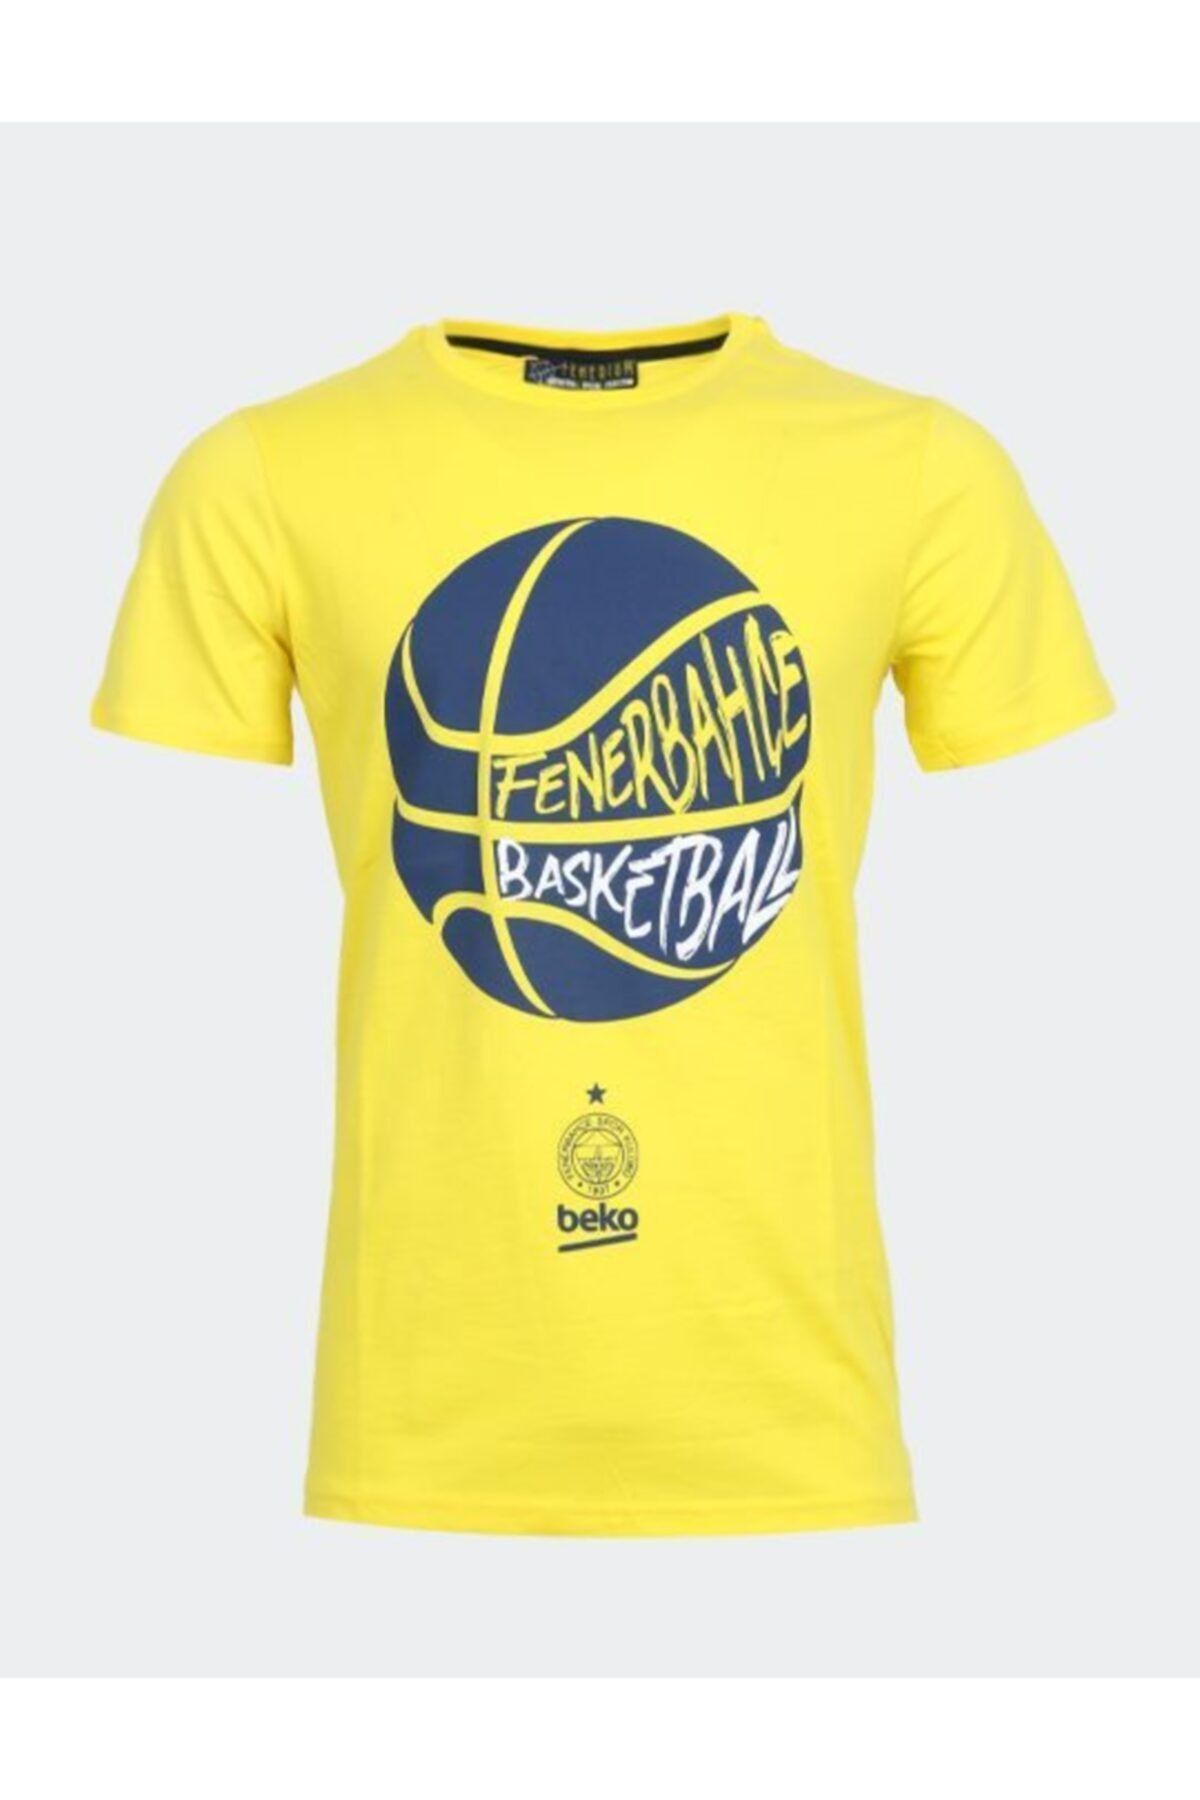 Fenerbahçe Basket Fb Basketbol Top Tshırt 20/21